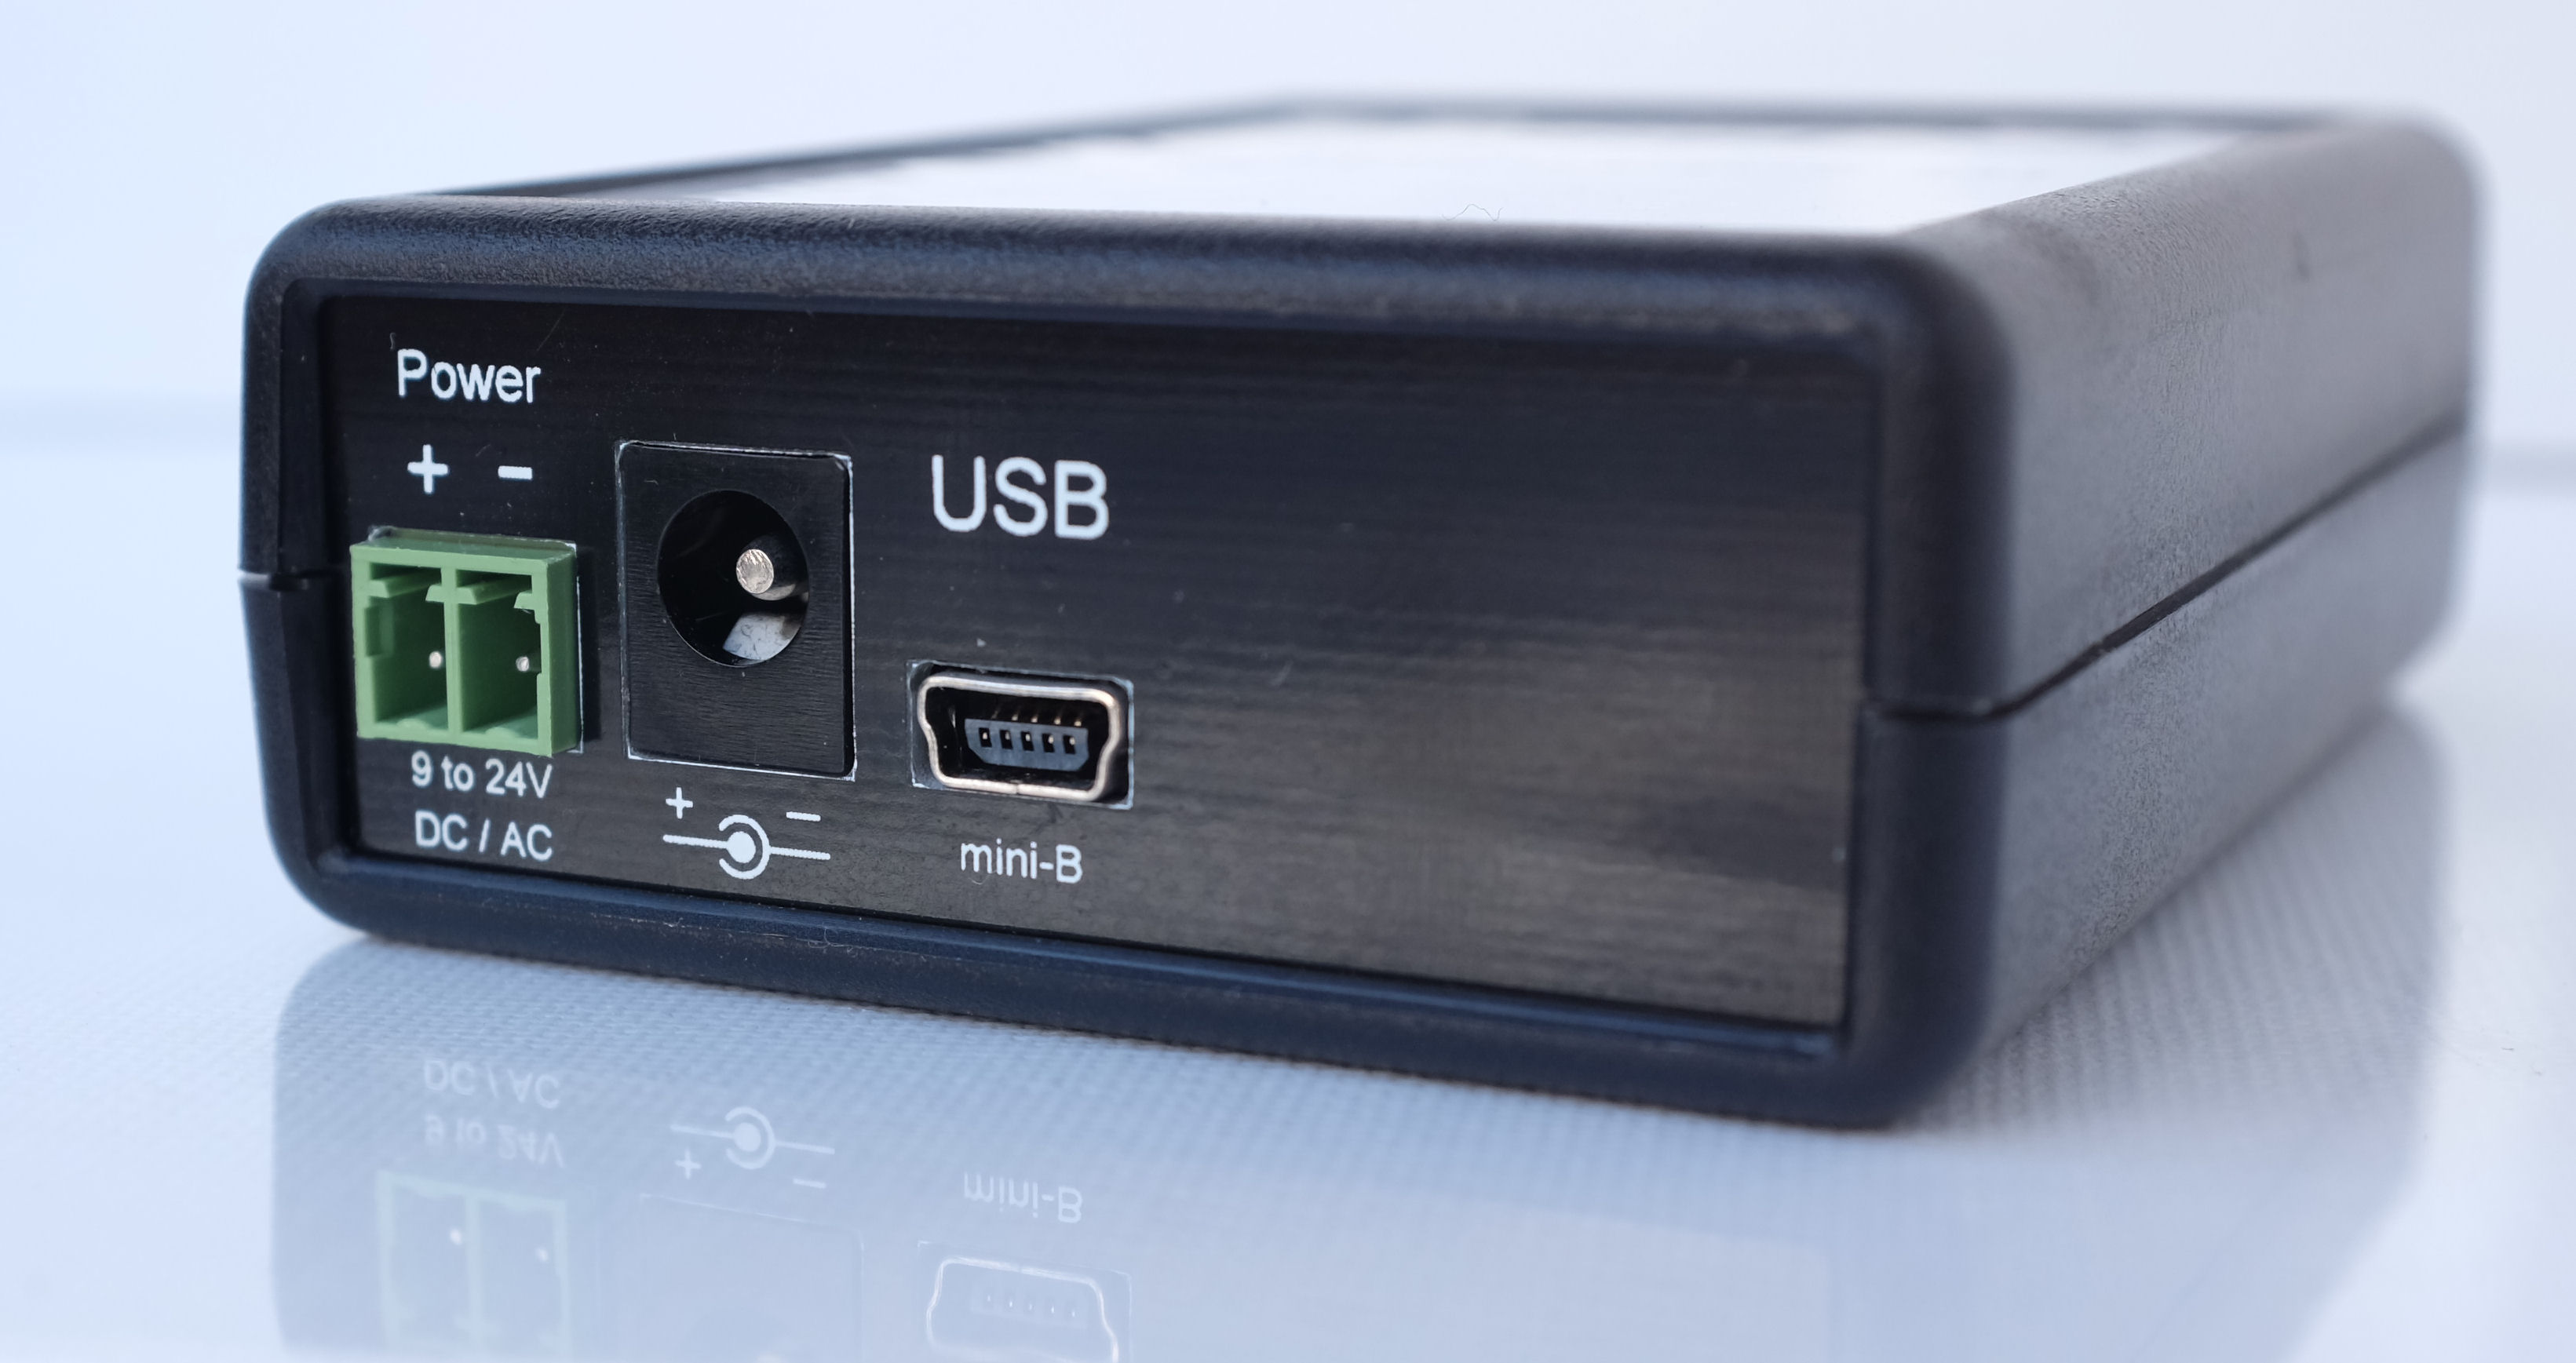 USB I/O Controller, DC or AC power input